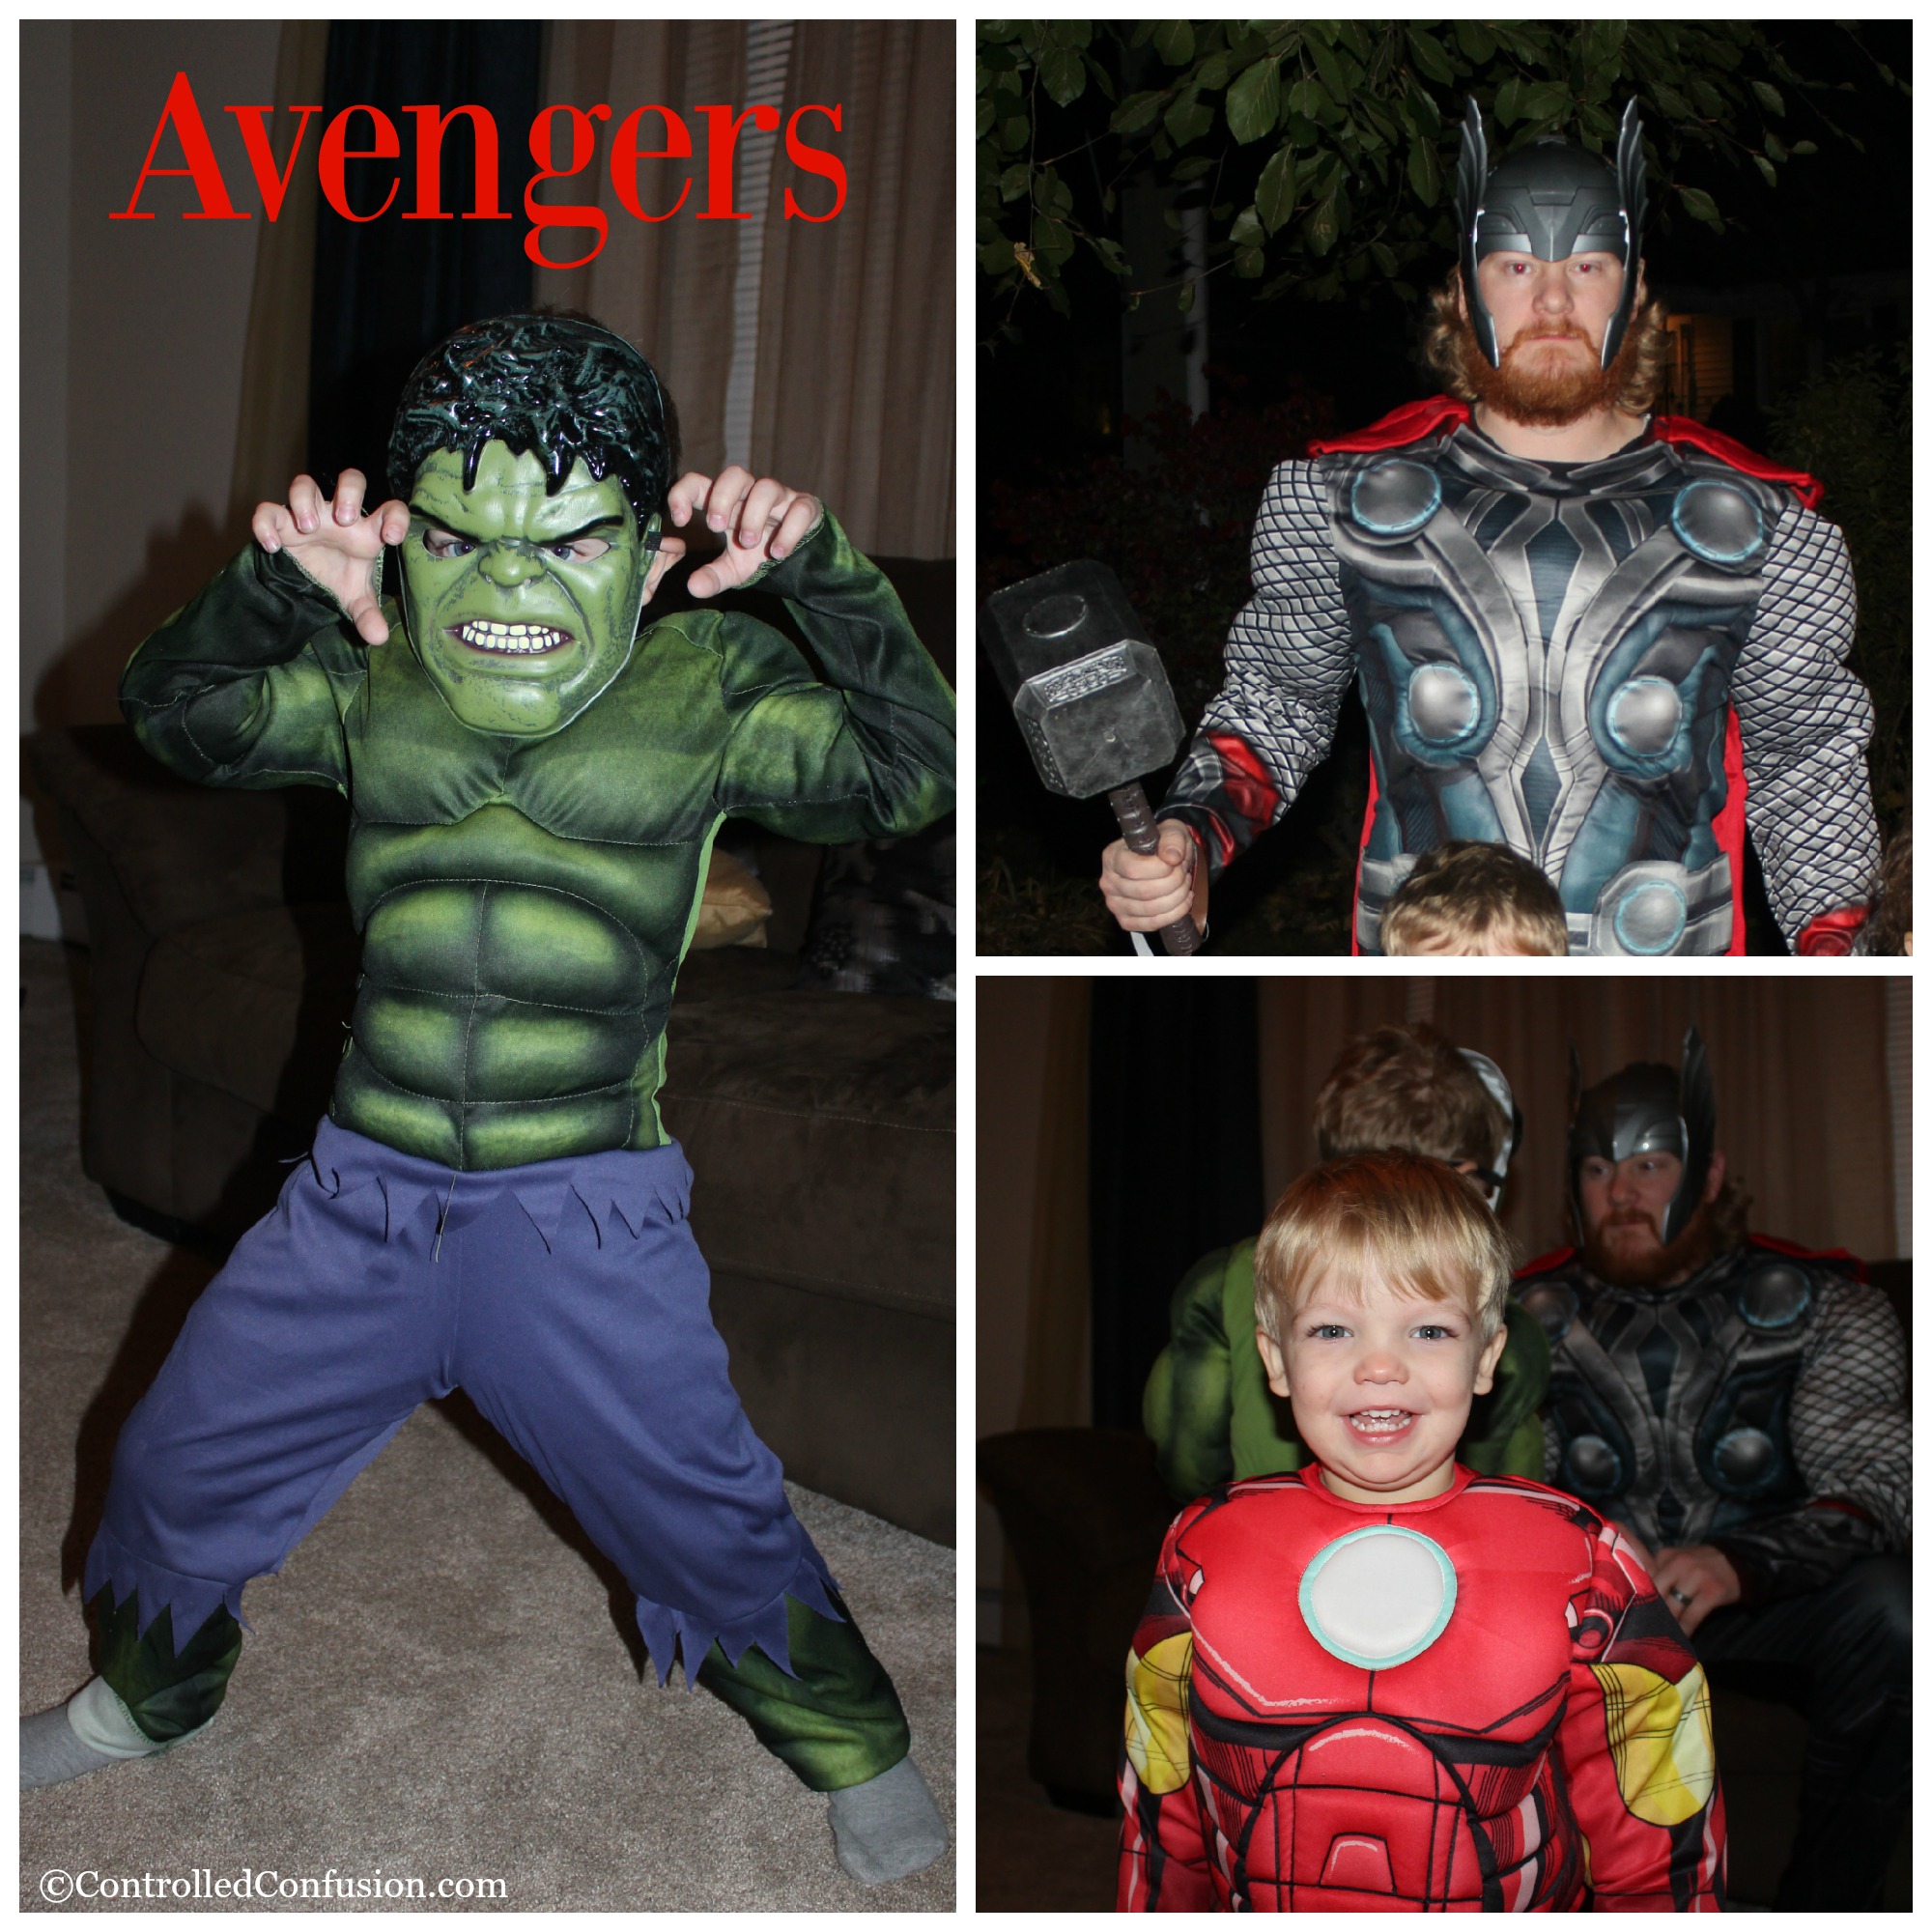 A Team of Avengers